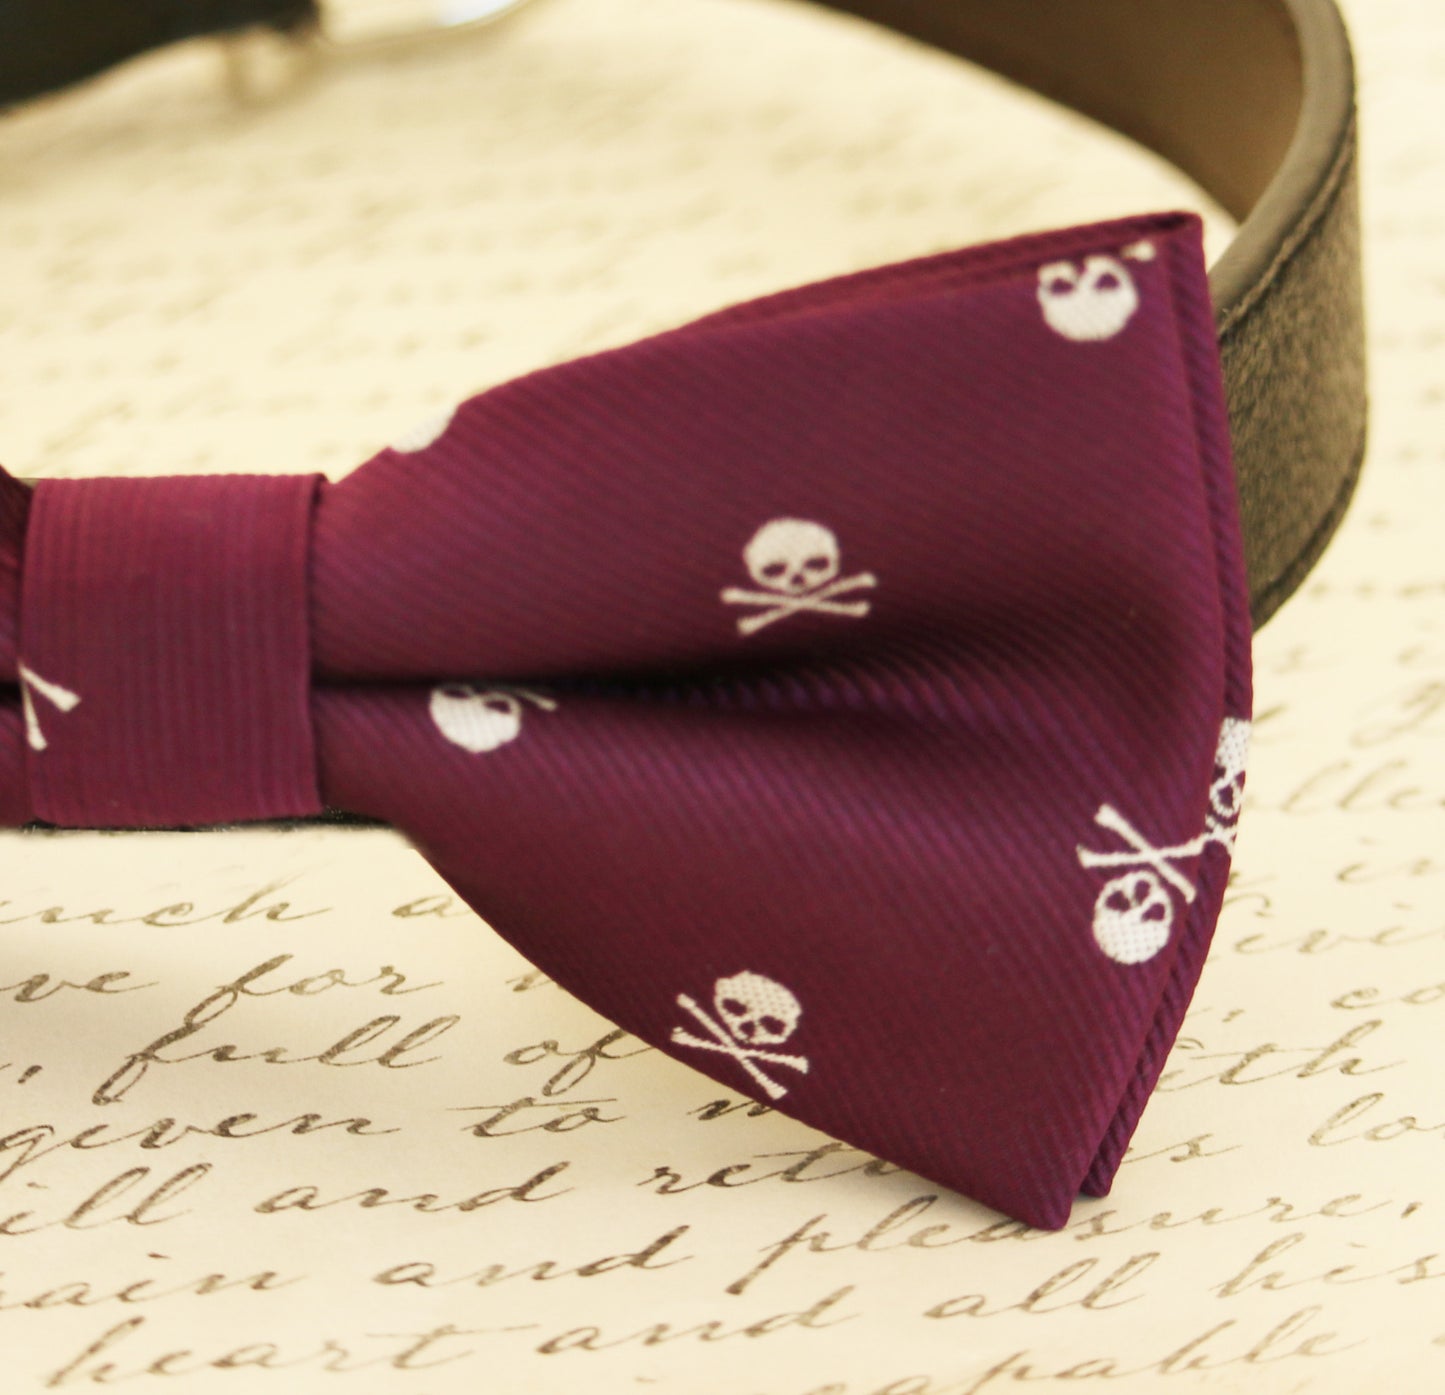 Purple dog bow tie attached to collar, Skull bow tie, wedding accessory , Wedding dog collar